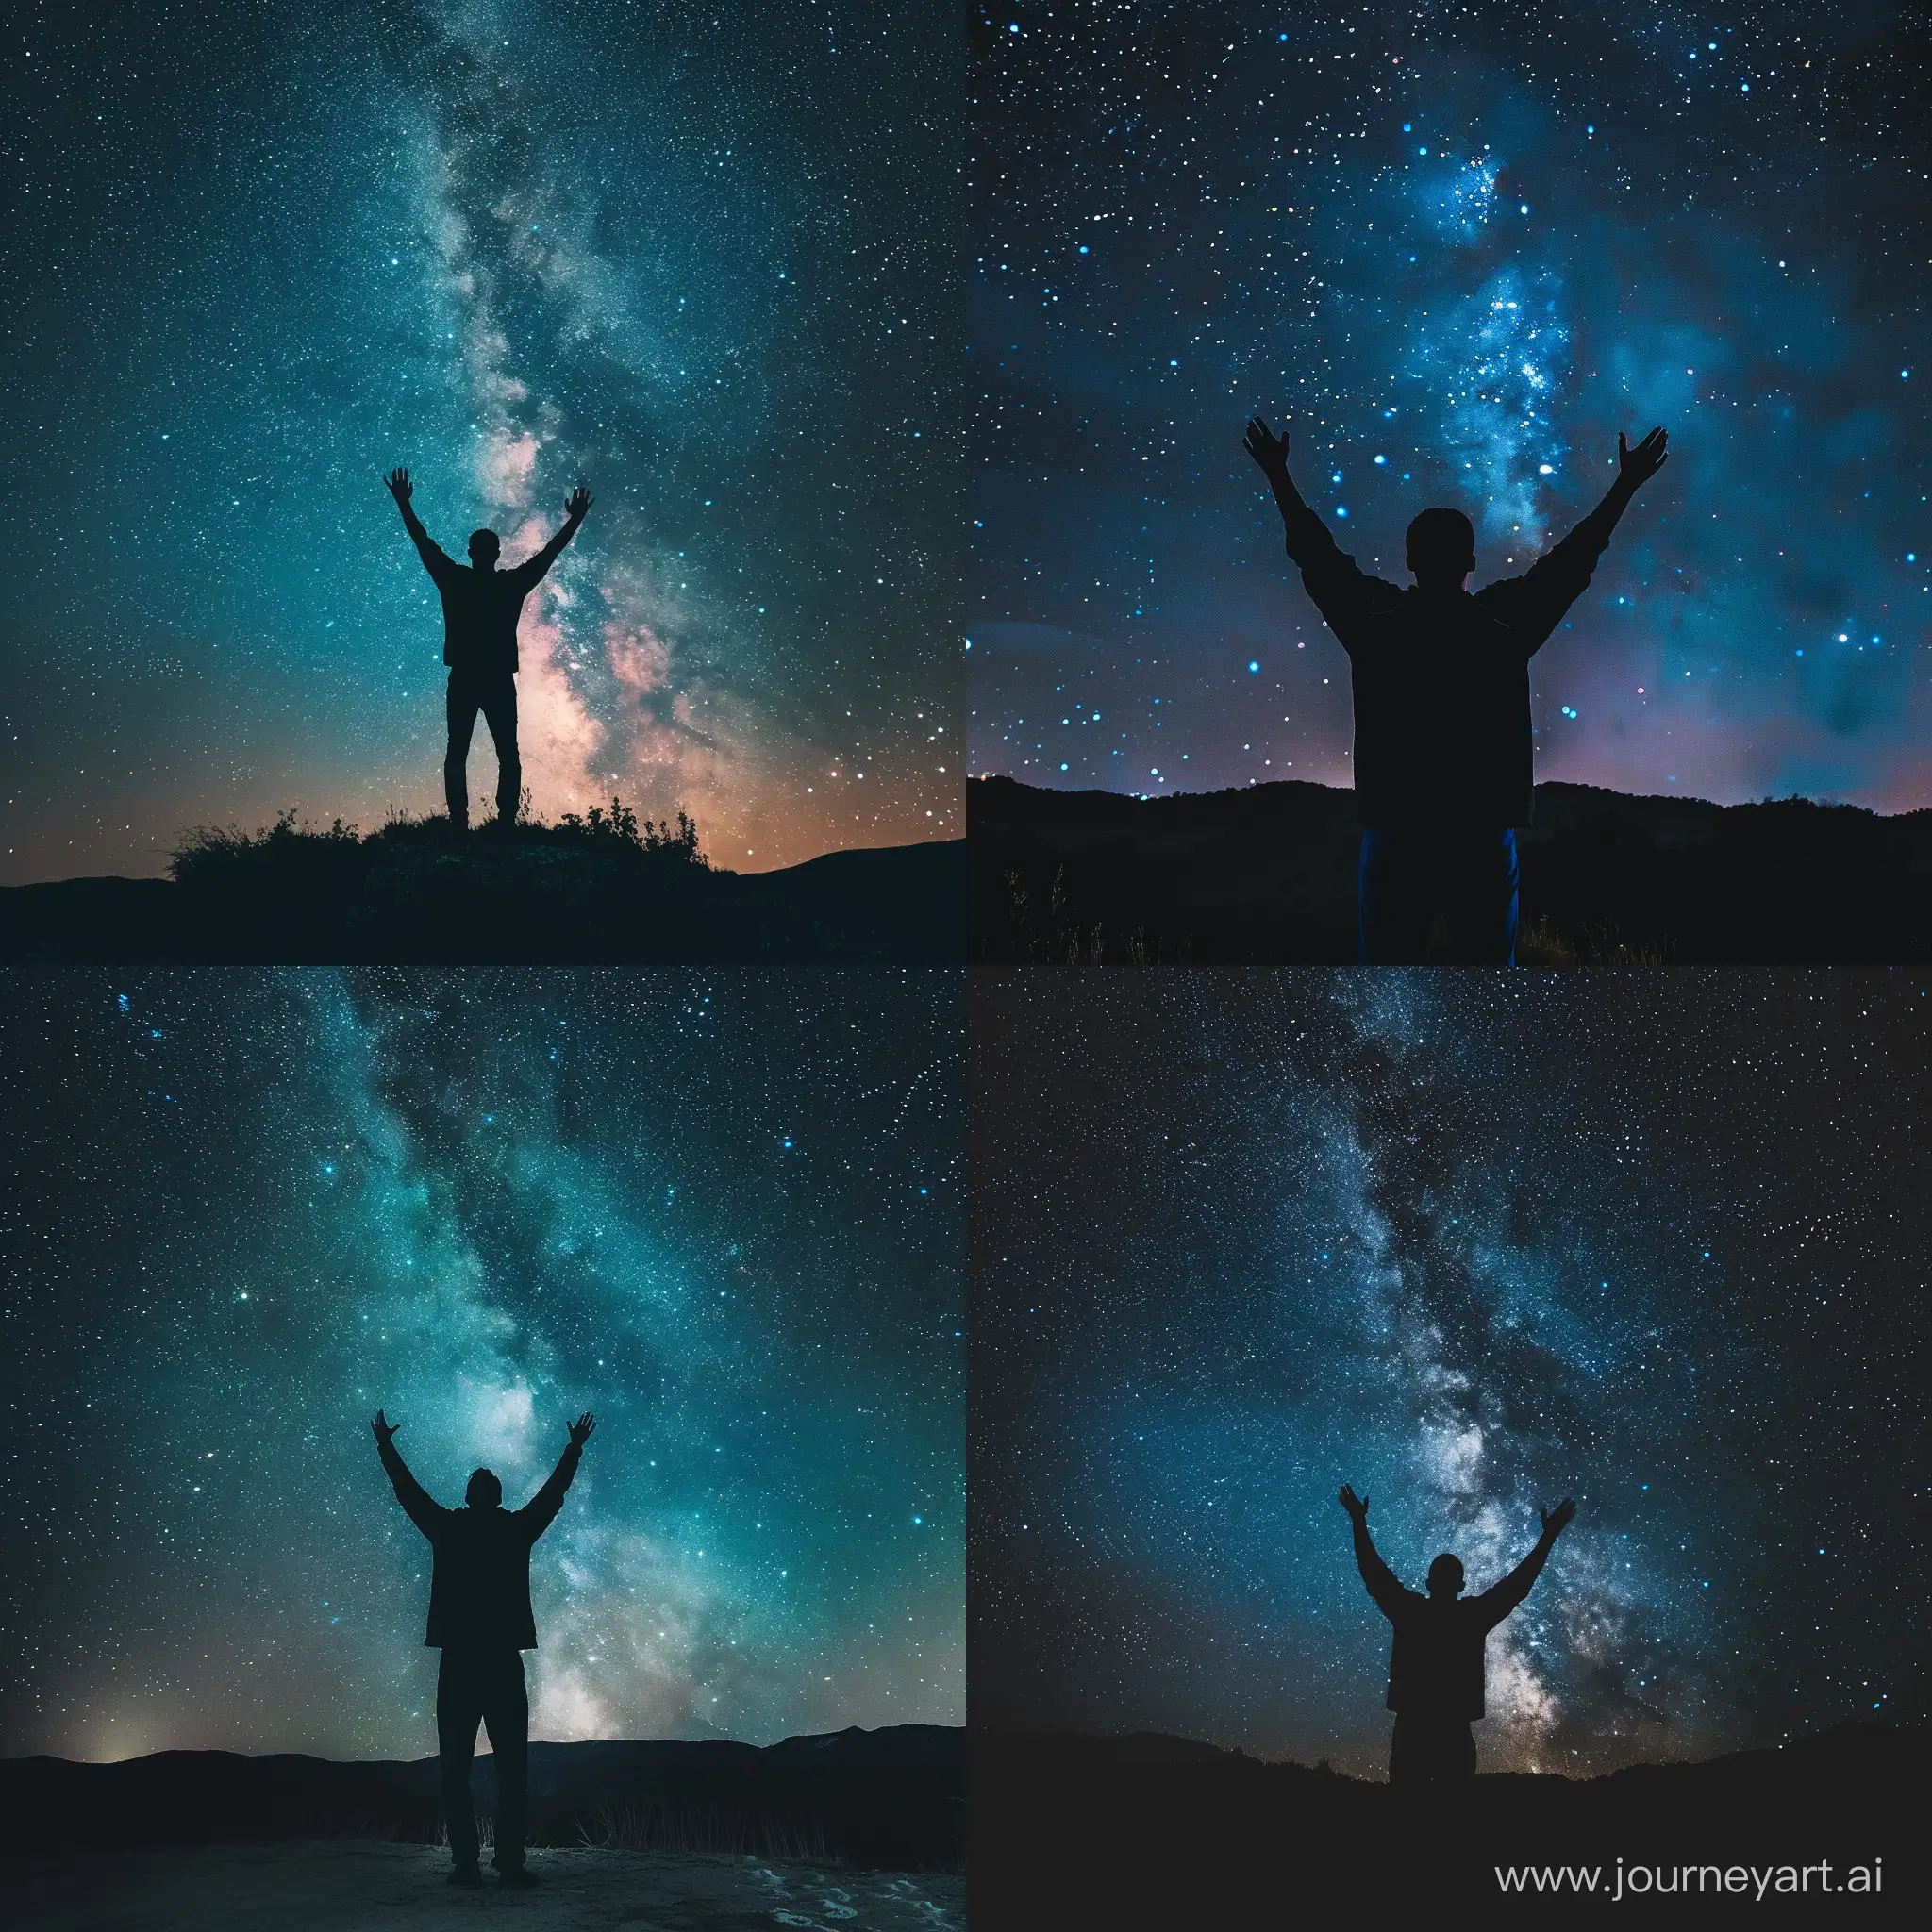 Man-Standing-in-Awe-under-Starry-Night-Sky